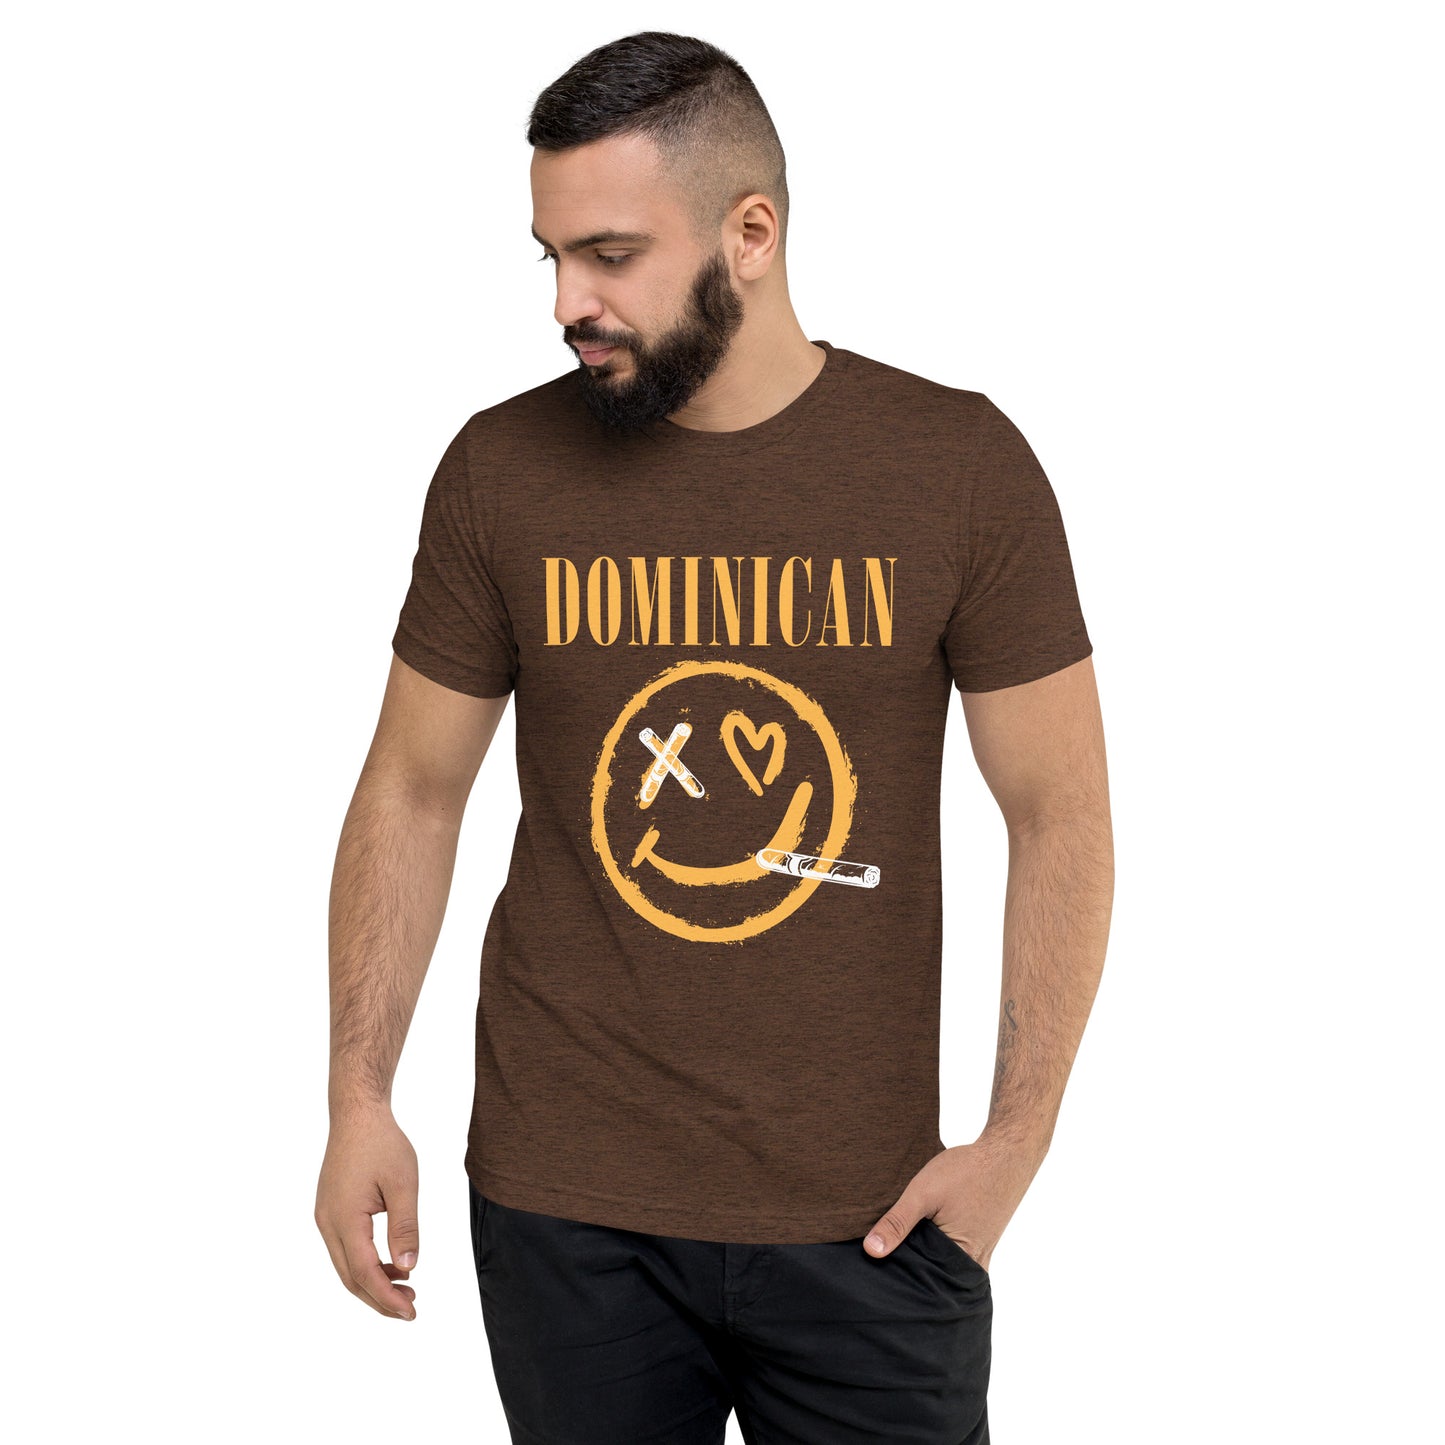 Leaf Aficio Dominican Bliss Short sleeve t-shirt